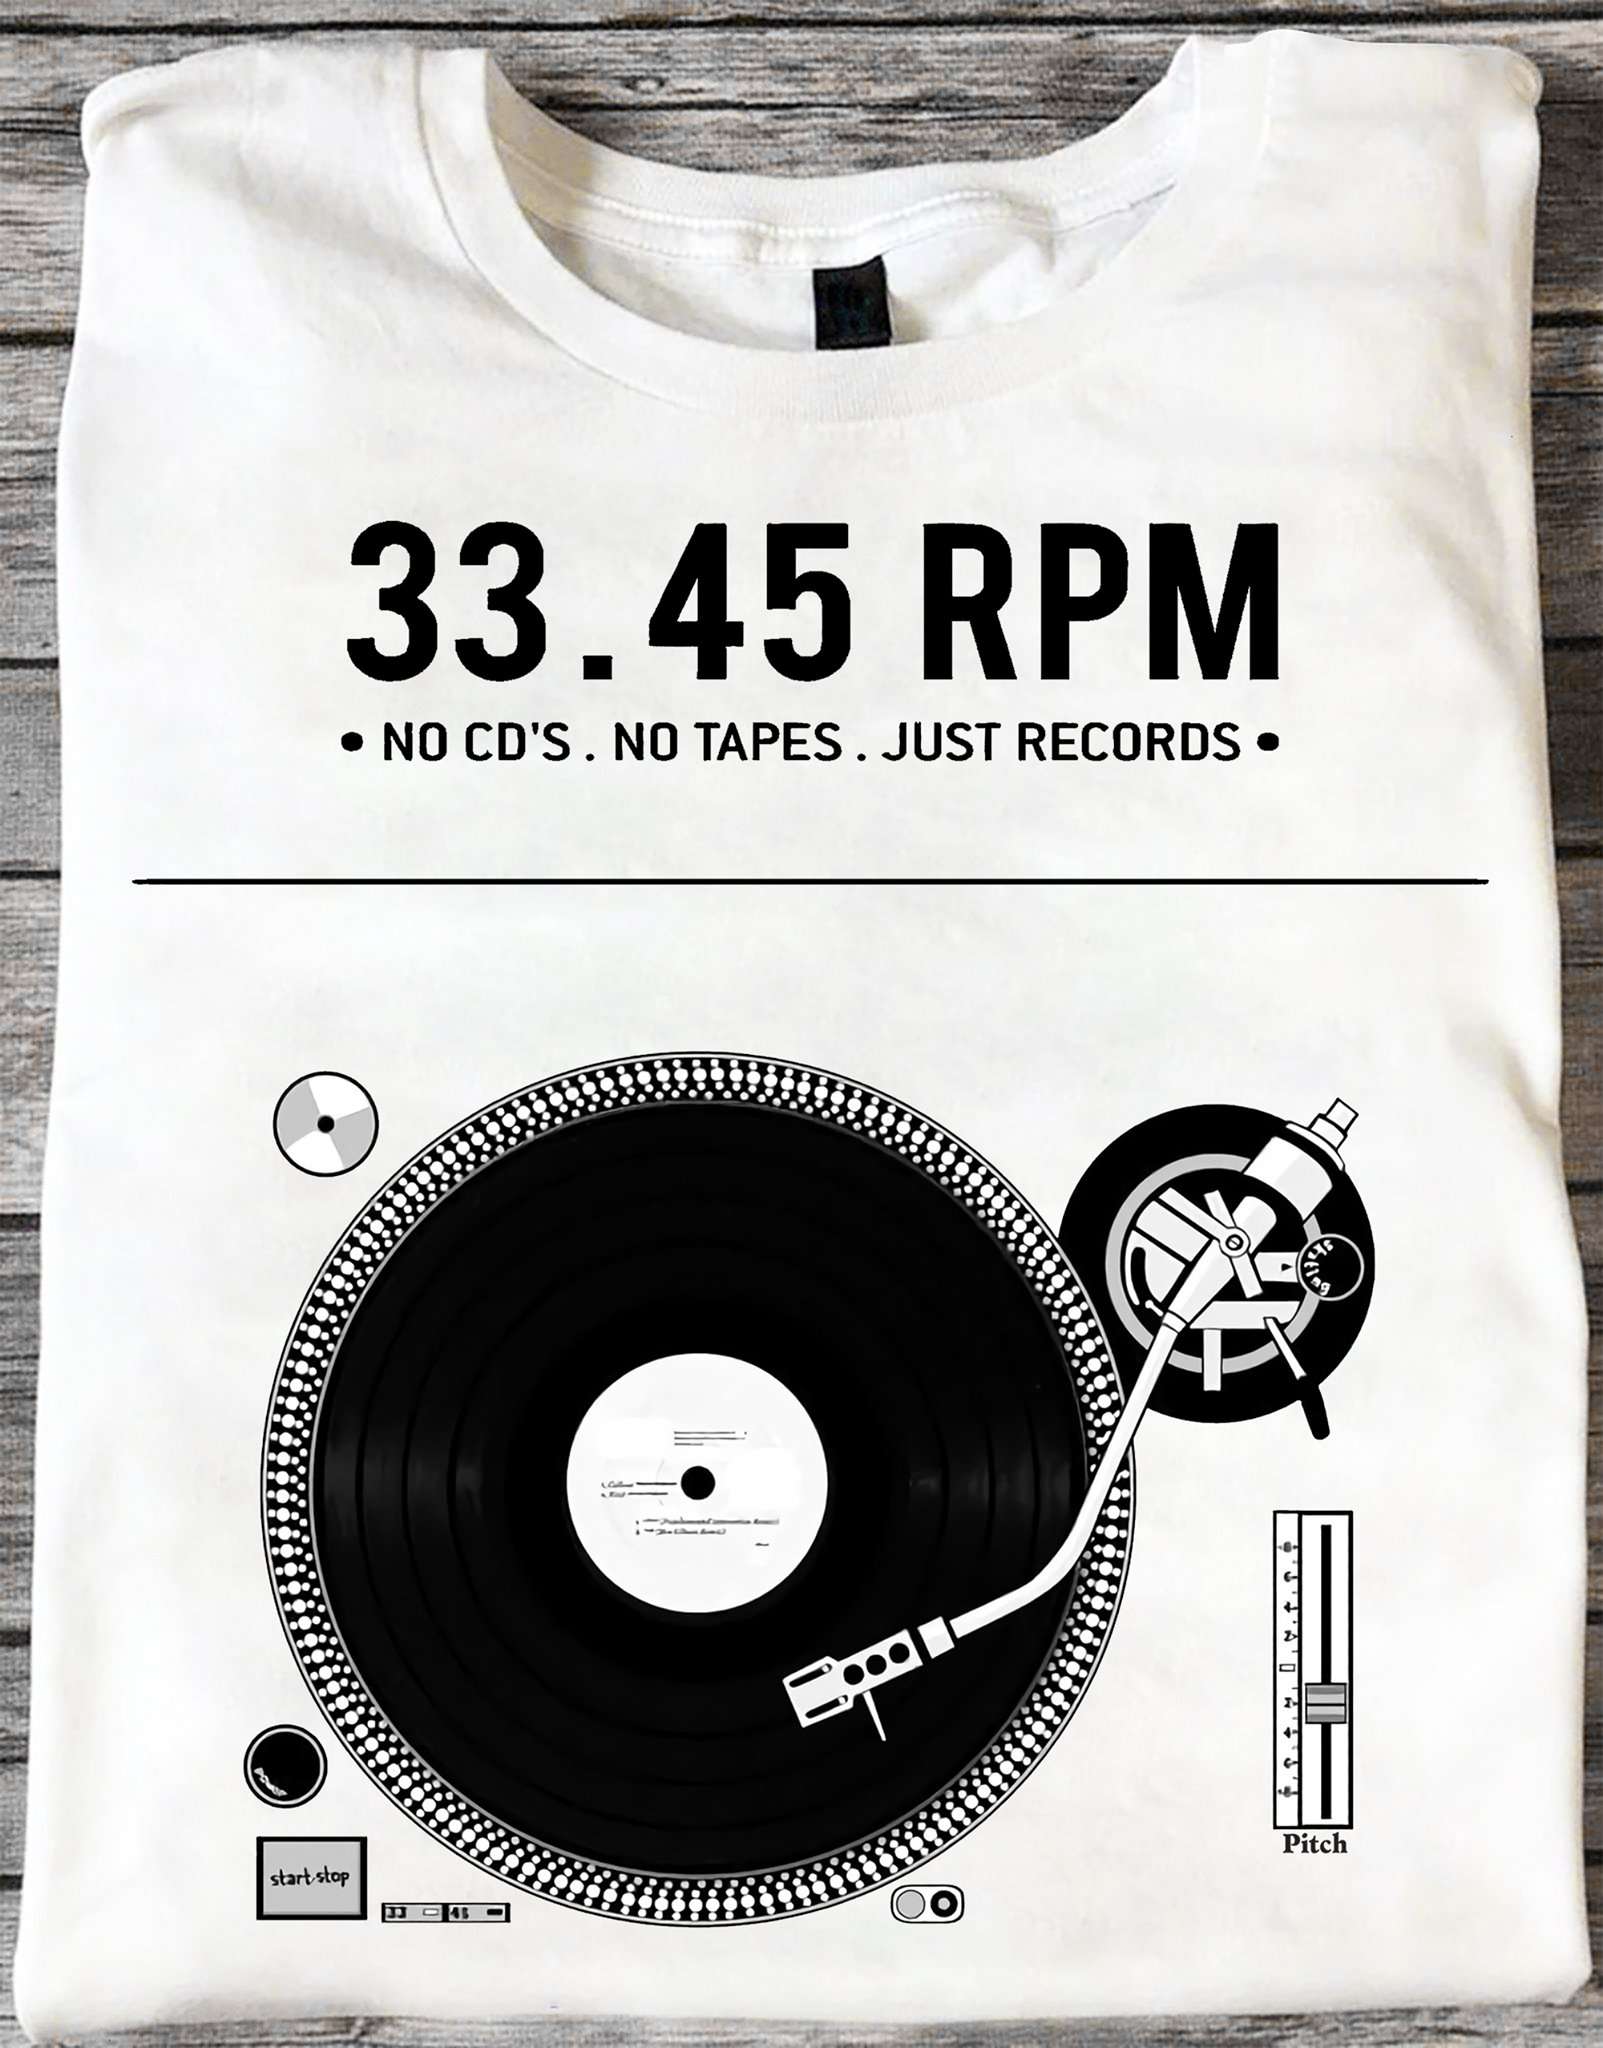 No cd's, no tapes, just records - Vinyl record lover